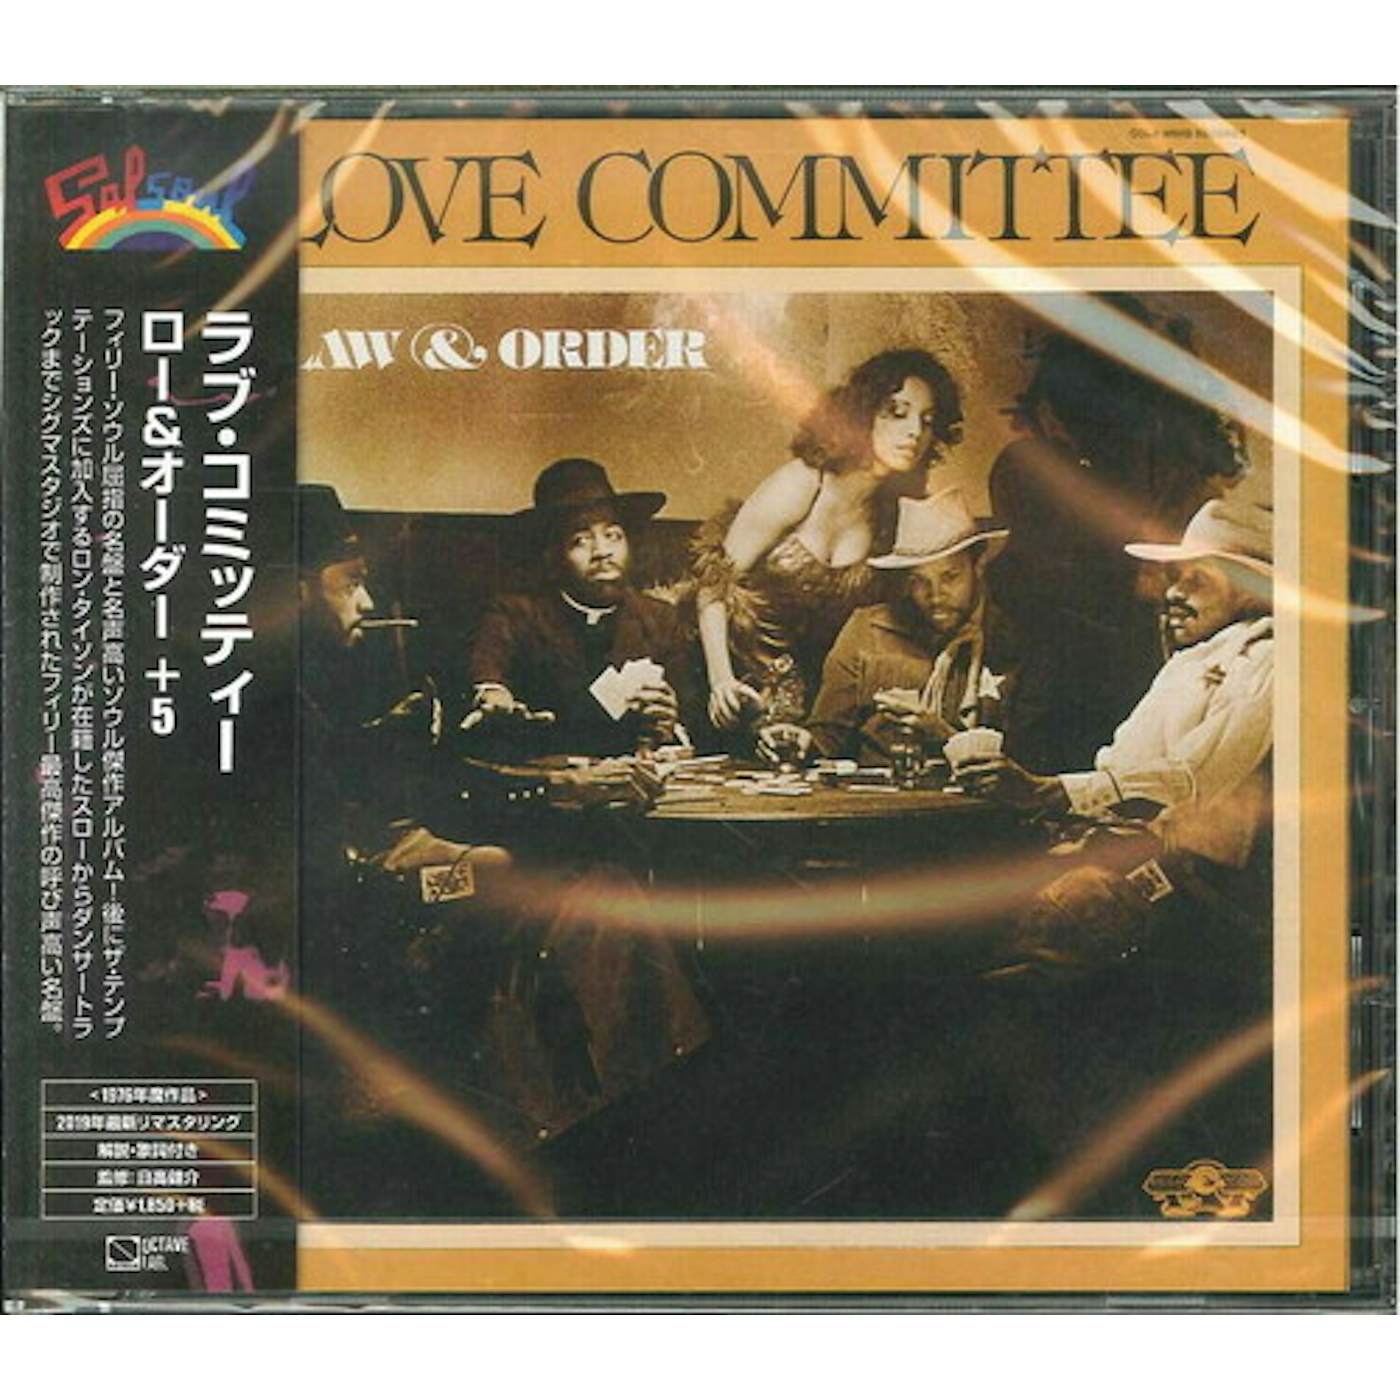 Love Committee LAW & ORDER + 5 CD